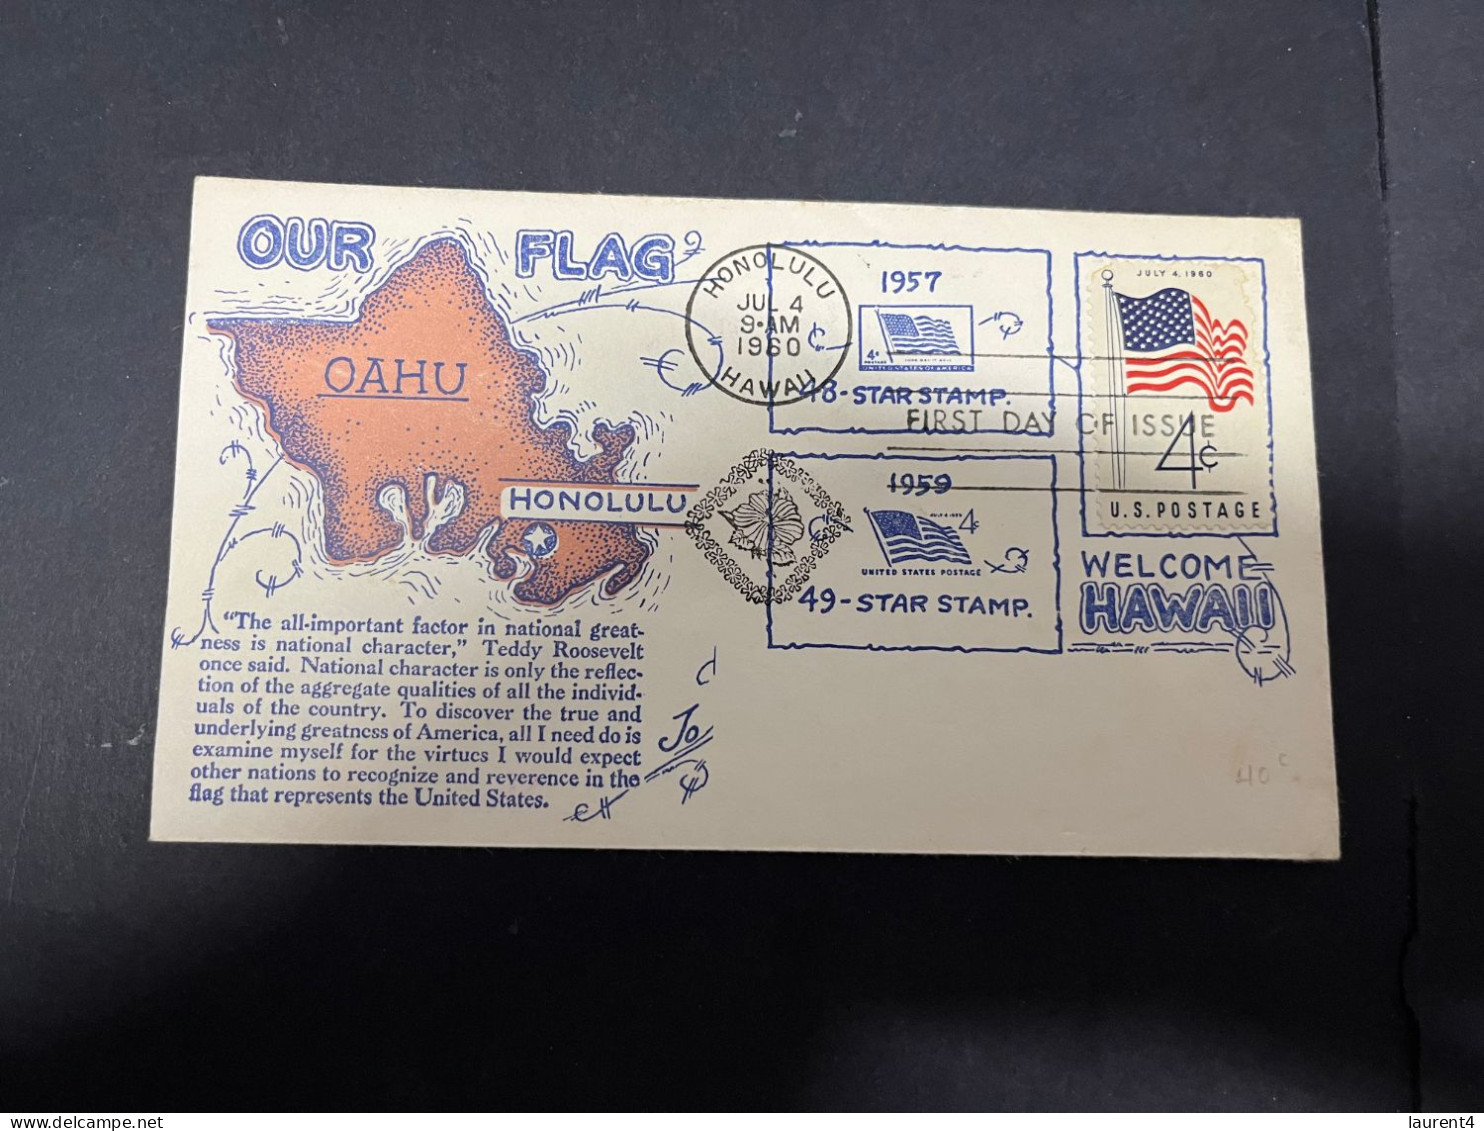 19-5-2024 (5 Z 34) USA 4 Cents Stamp FDC - 1960 - Our Flag - Oahu Honoluluu - Covers